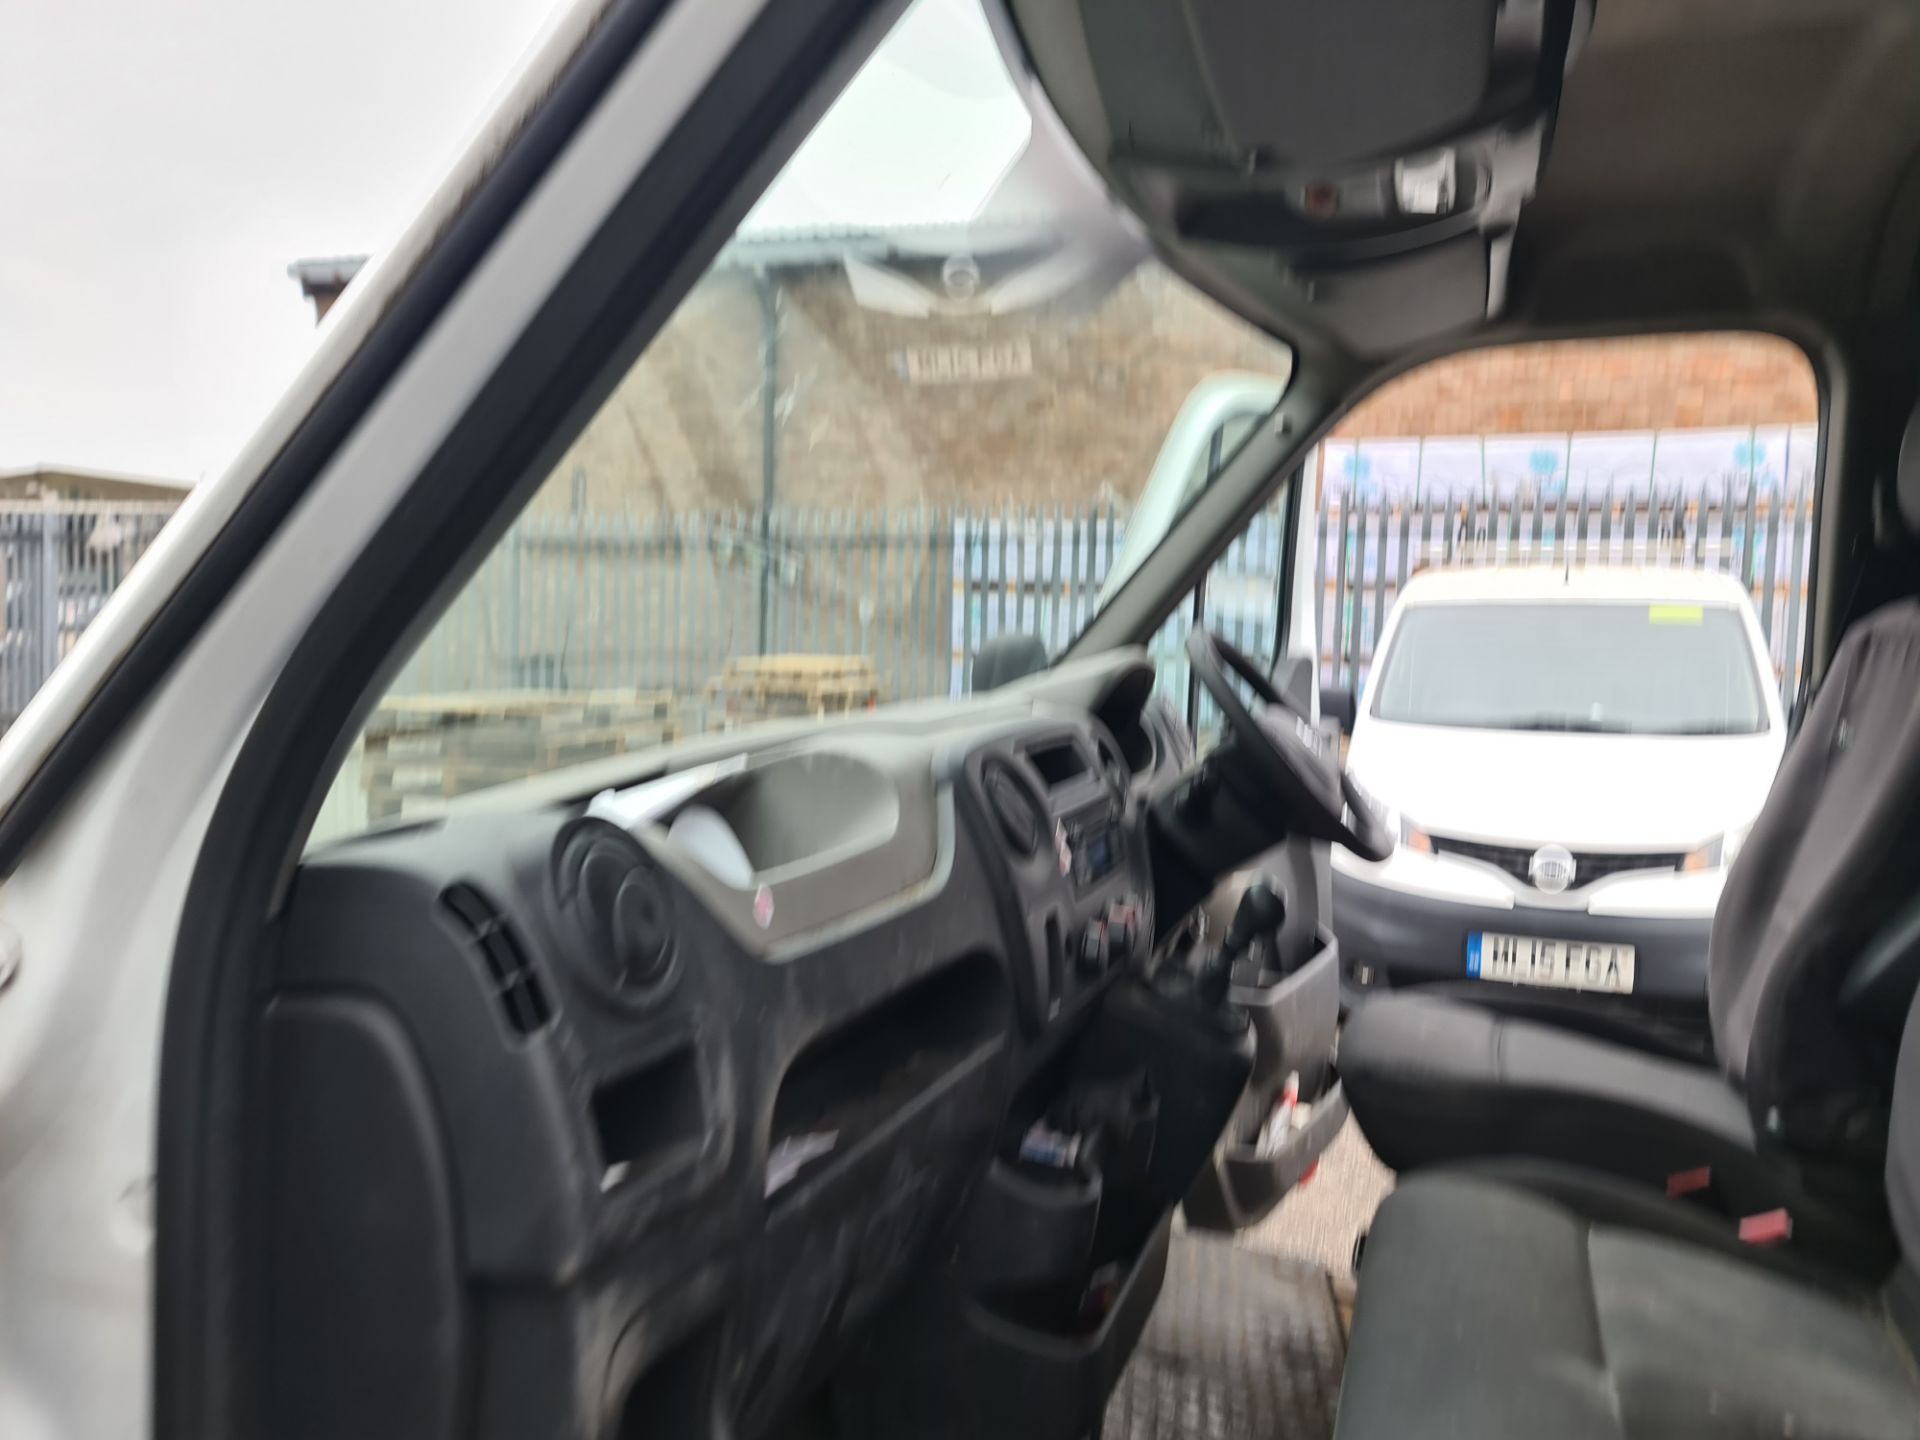 2015 Nissan NV400 SE DCI panel van - Image 53 of 74